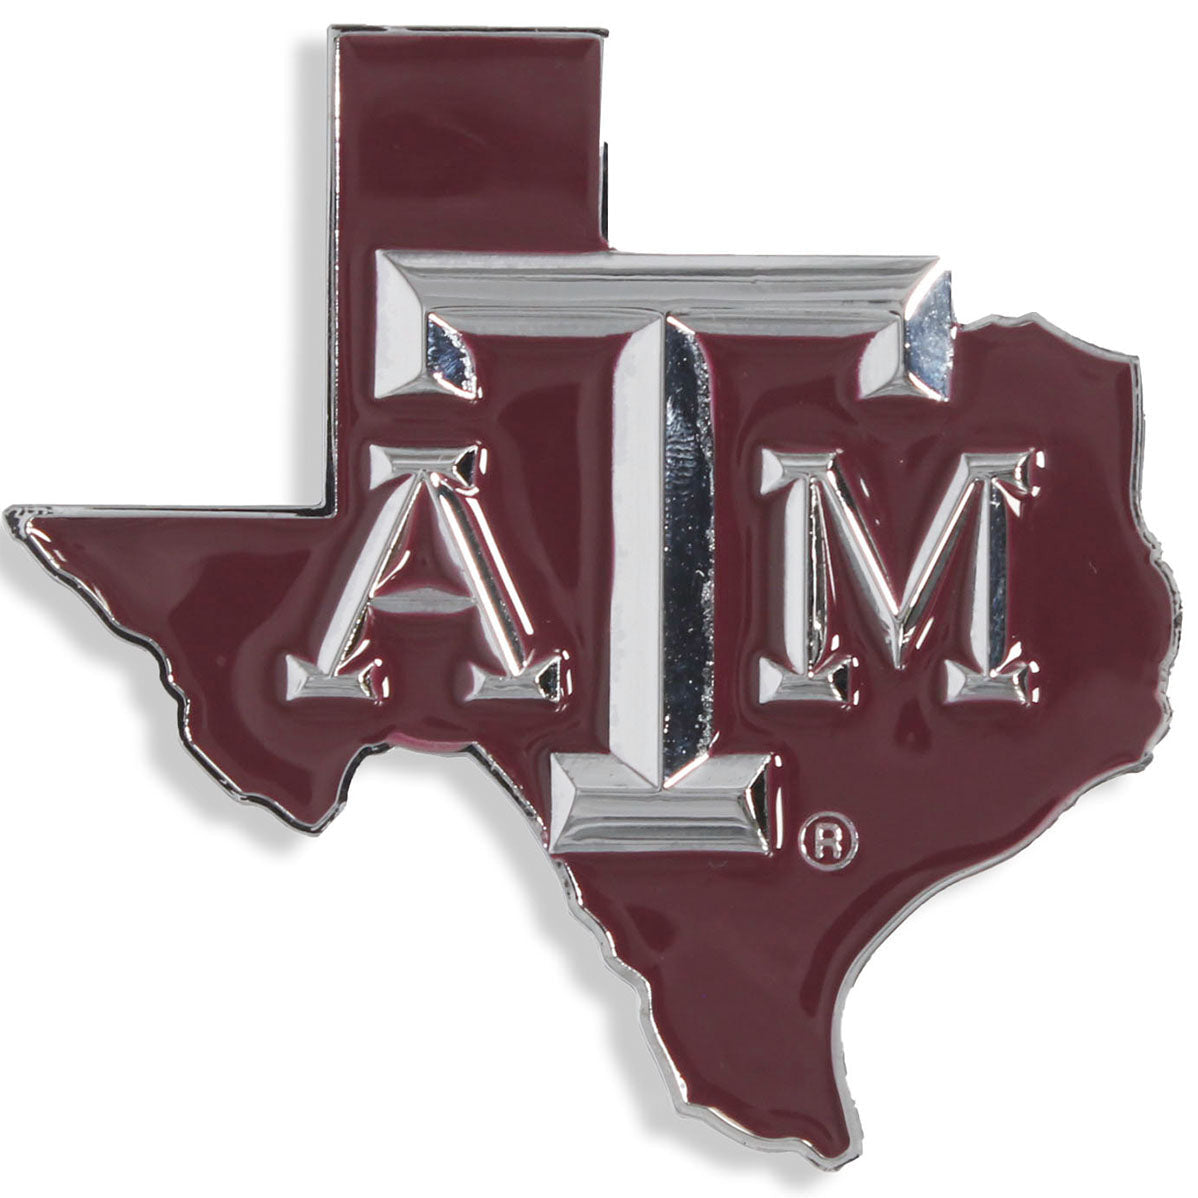 Texas A&M Maroon Lone Star Emblem